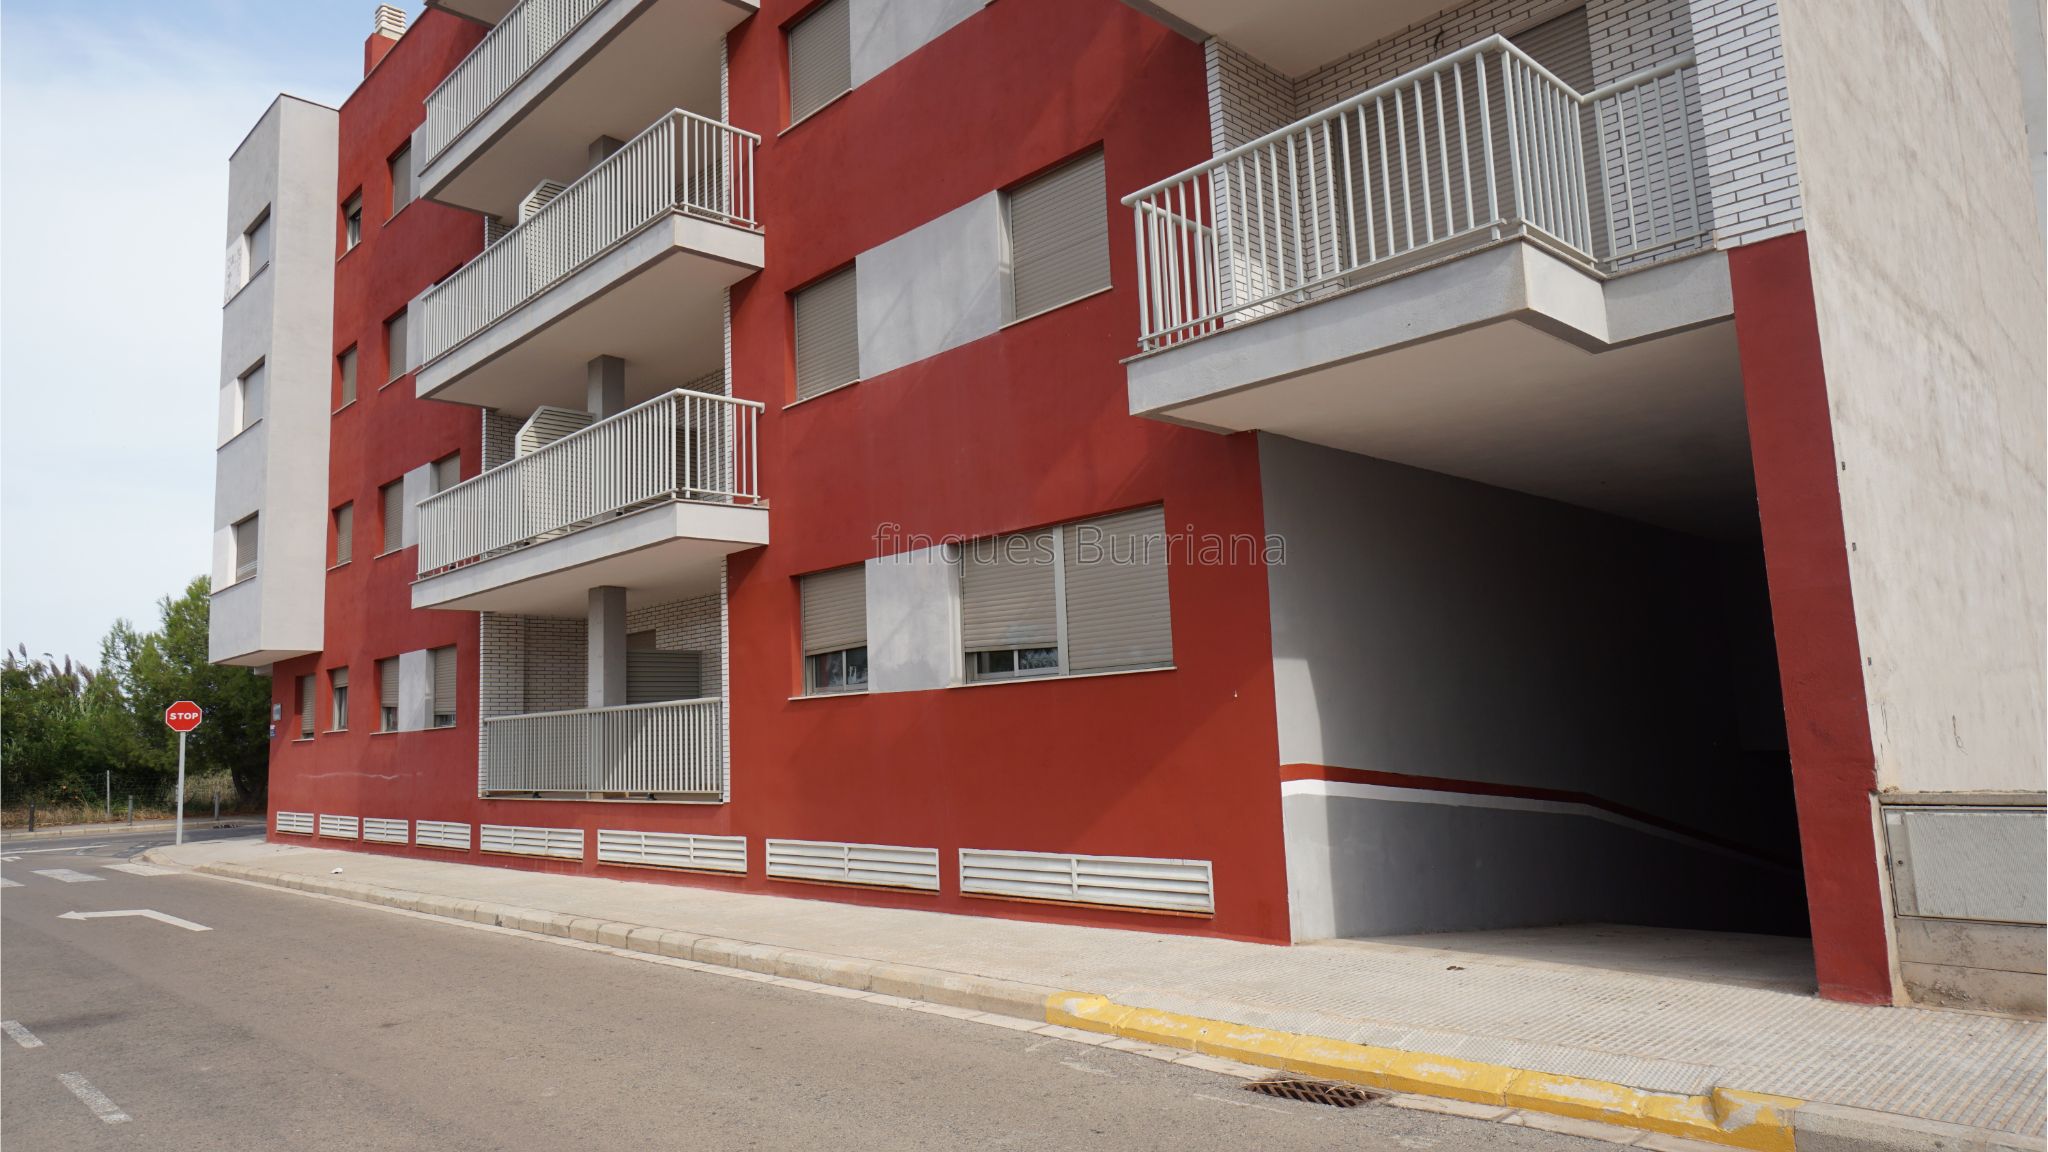 Promoción de viviendas en Moncofa (Castellón)